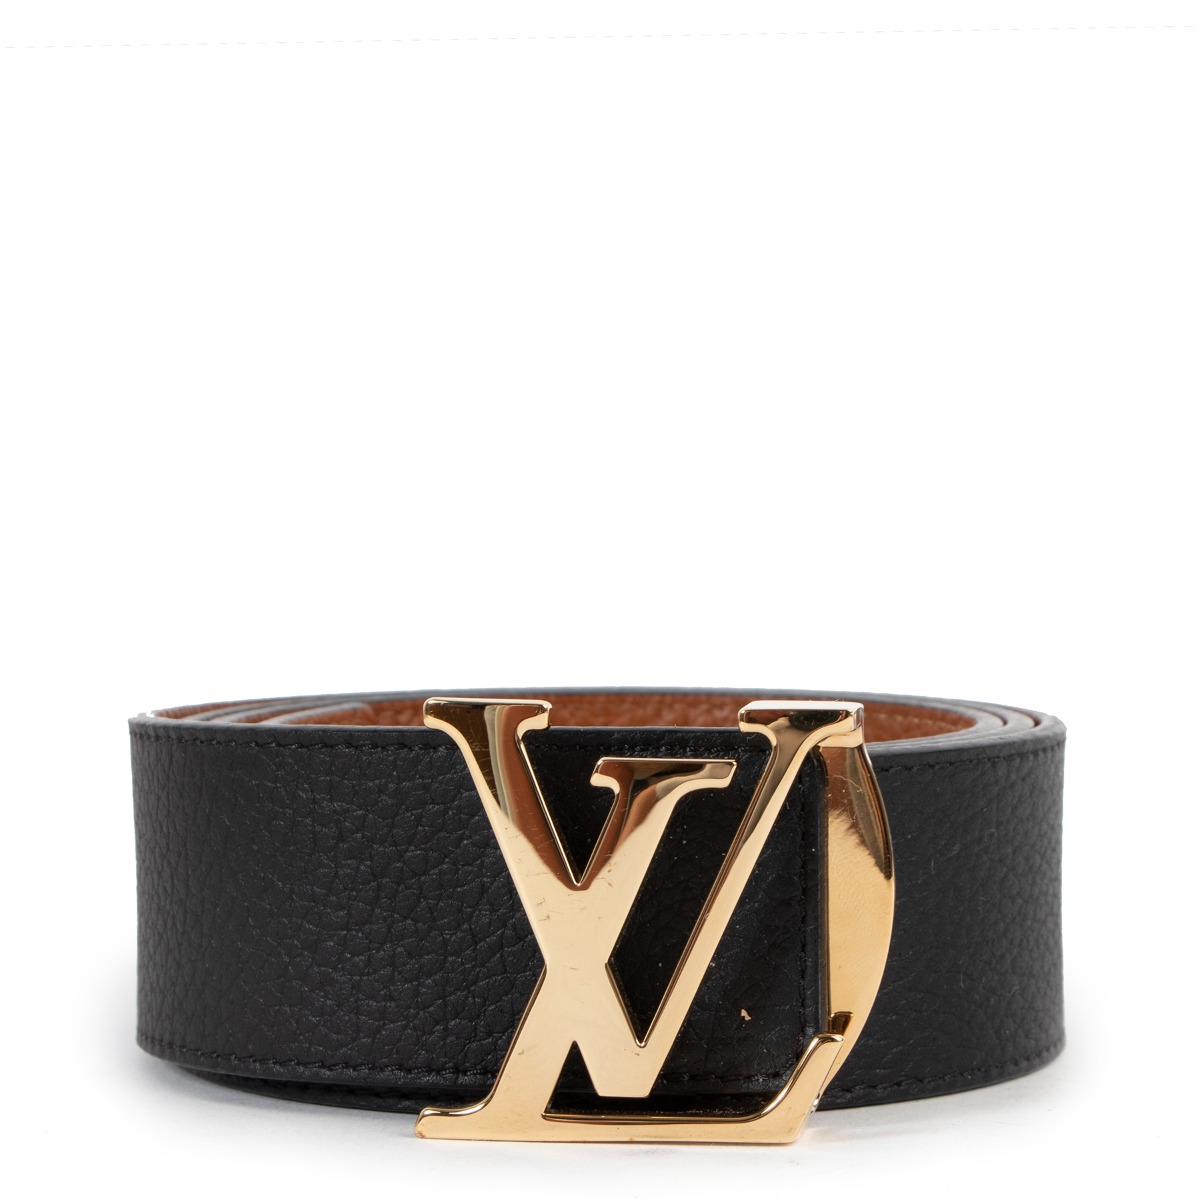 New Authentic Louis Vuitton belt - clothing & accessories - by owner -  apparel sale - craigslist